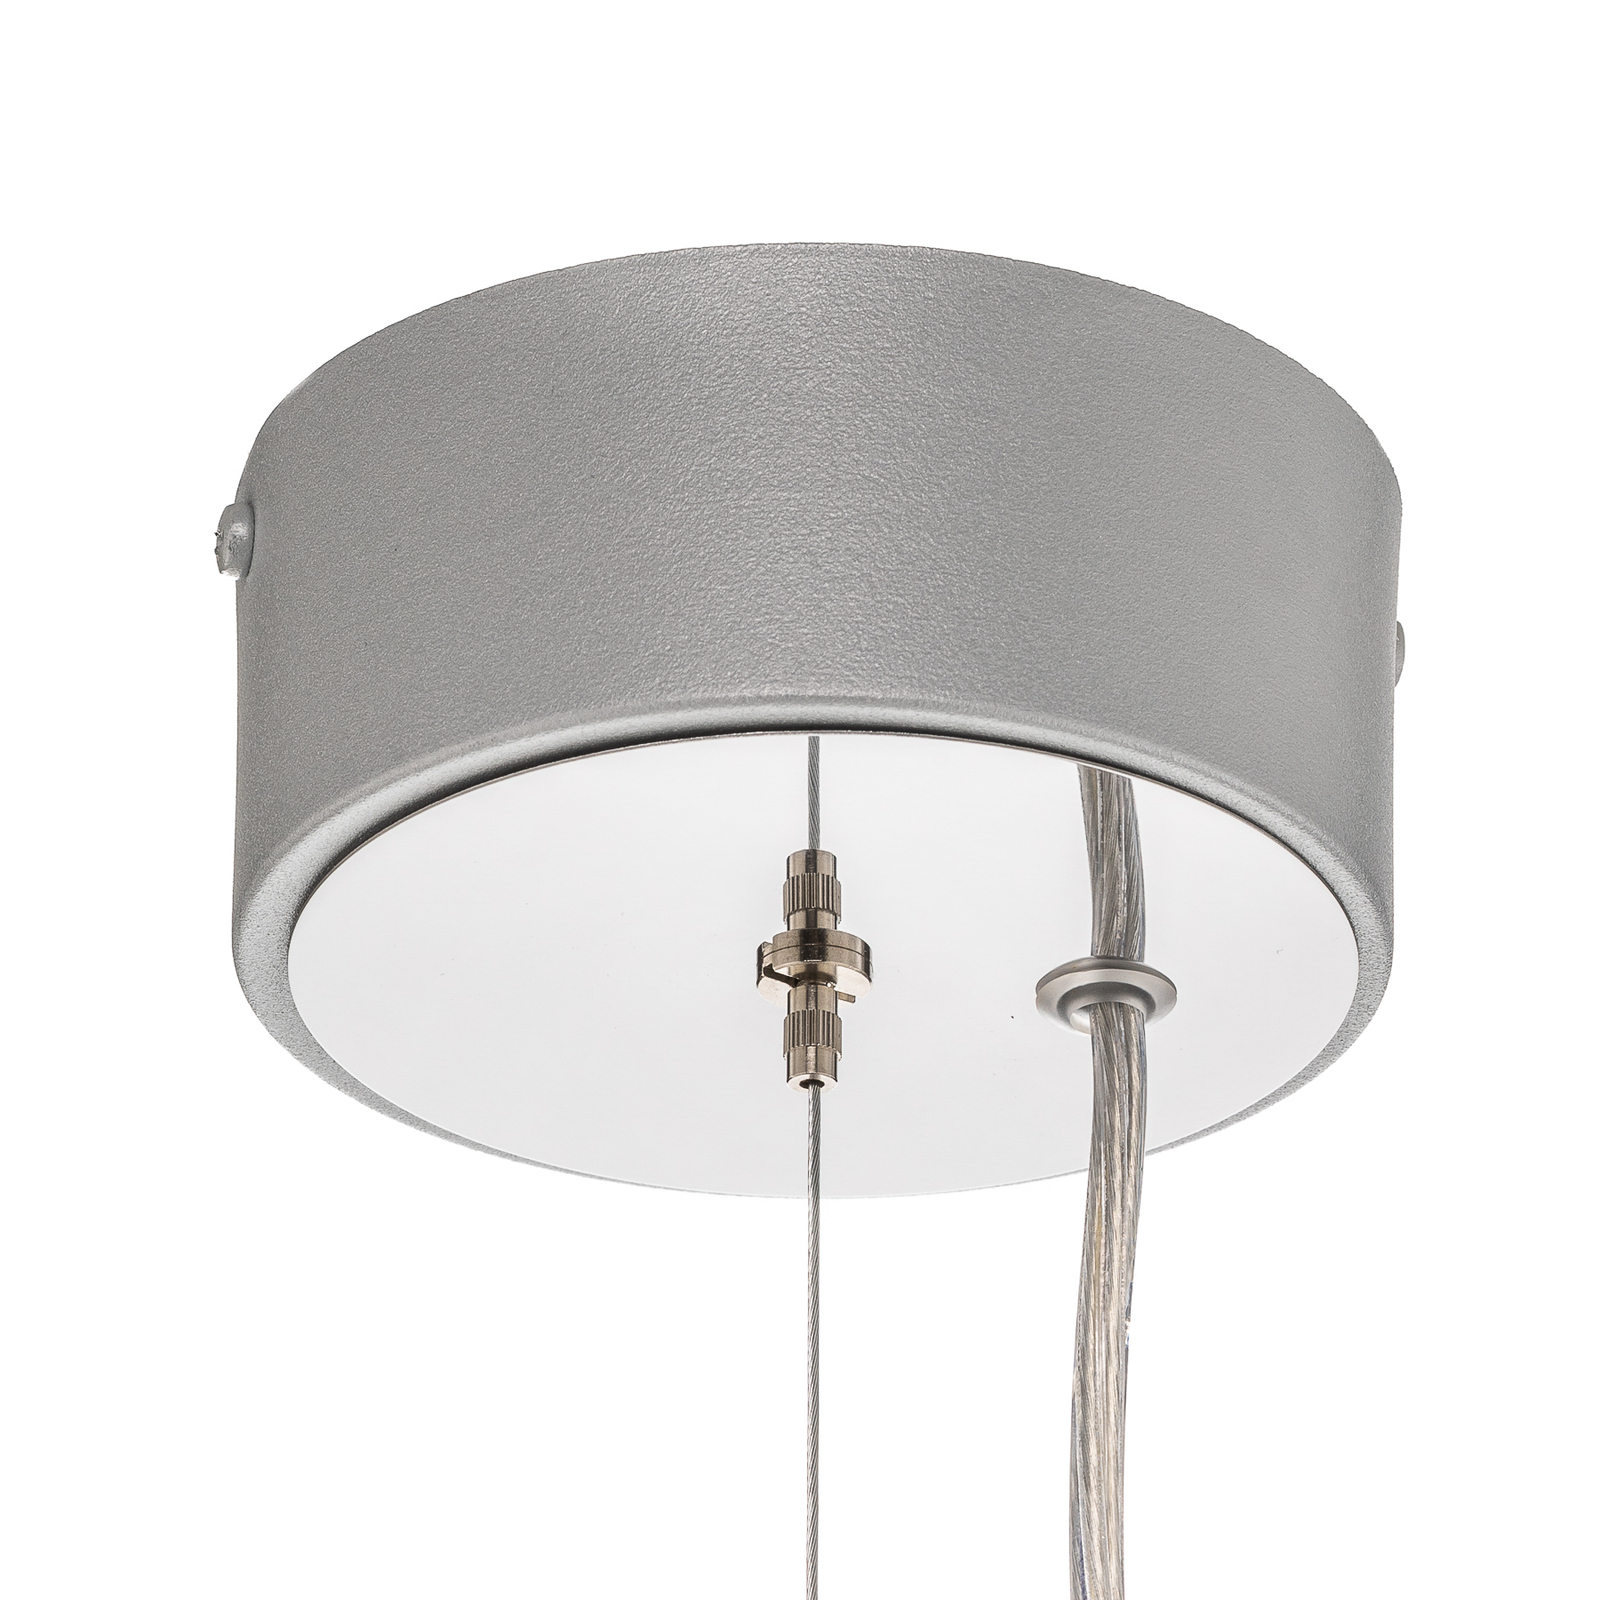 Vento hanglamp, aluminiumkleurig, Ø 60 cm, metaal, E27